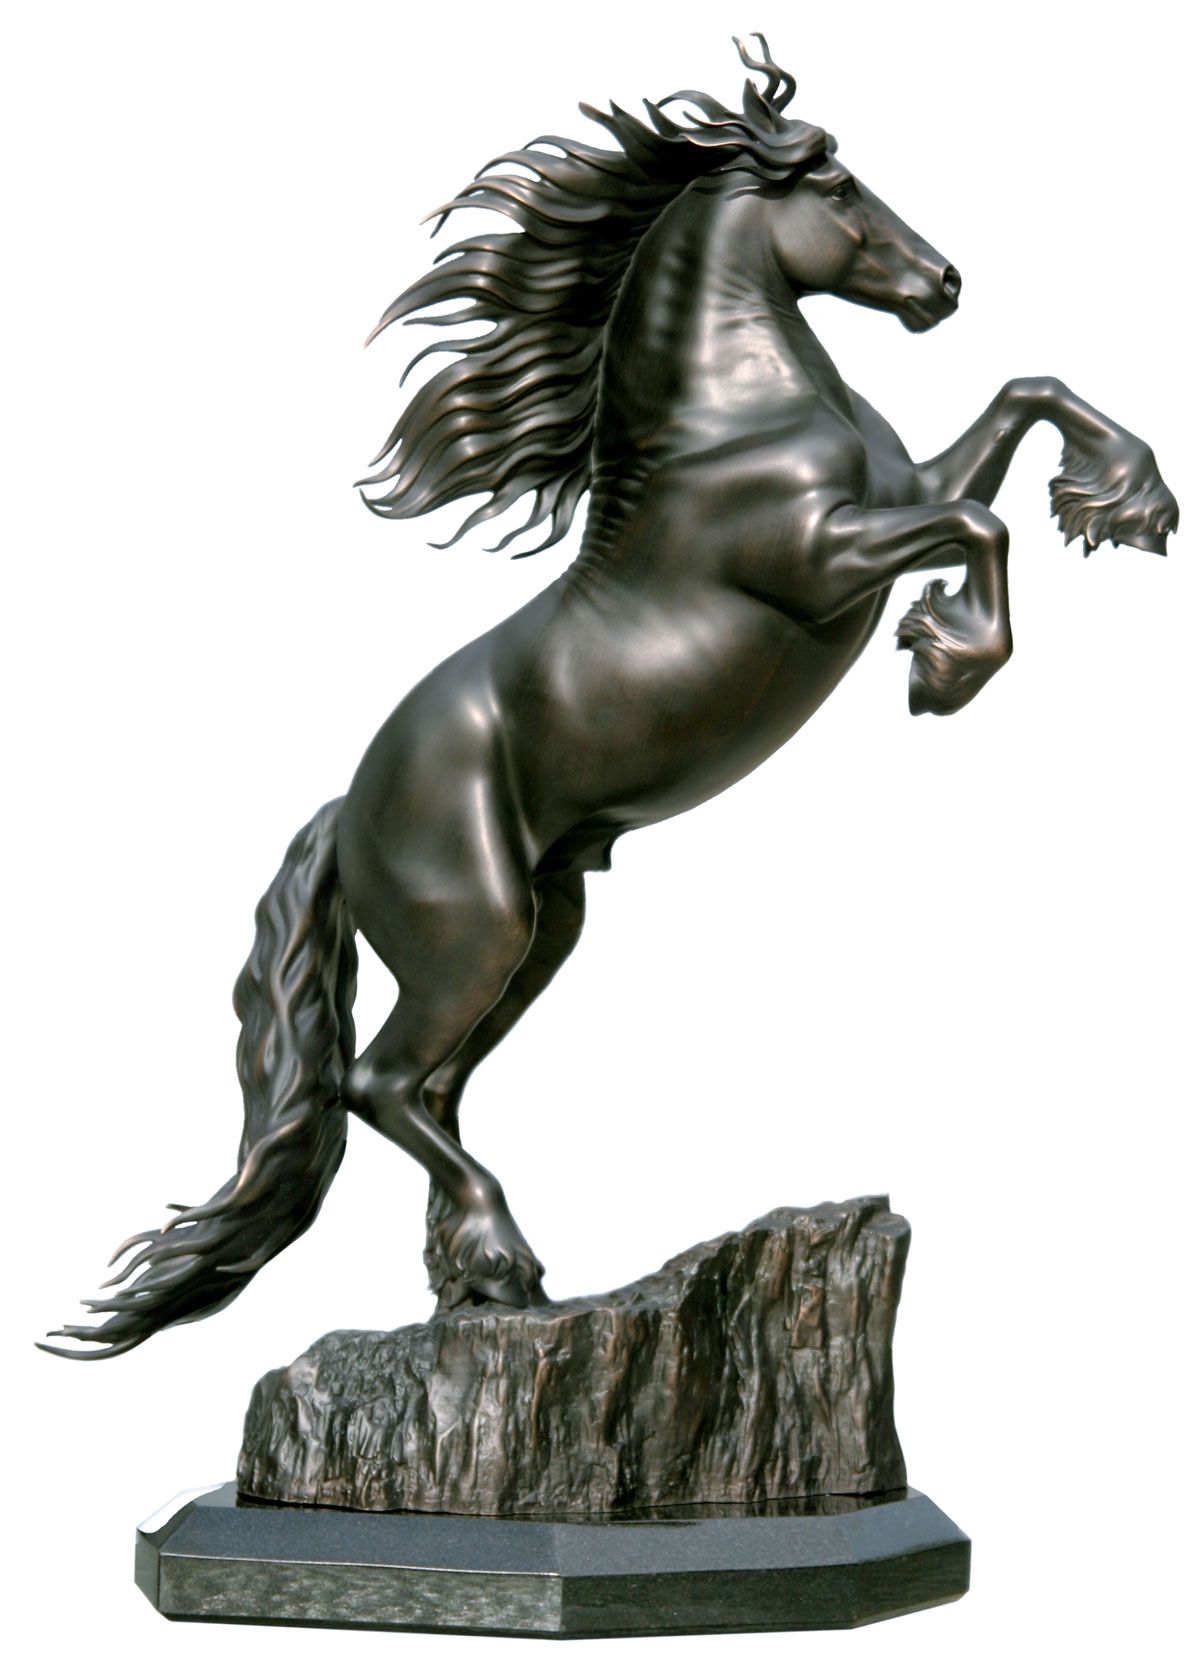 Friedom | anatomy horse | Pinterest | Horse, Horse sculpture and ...